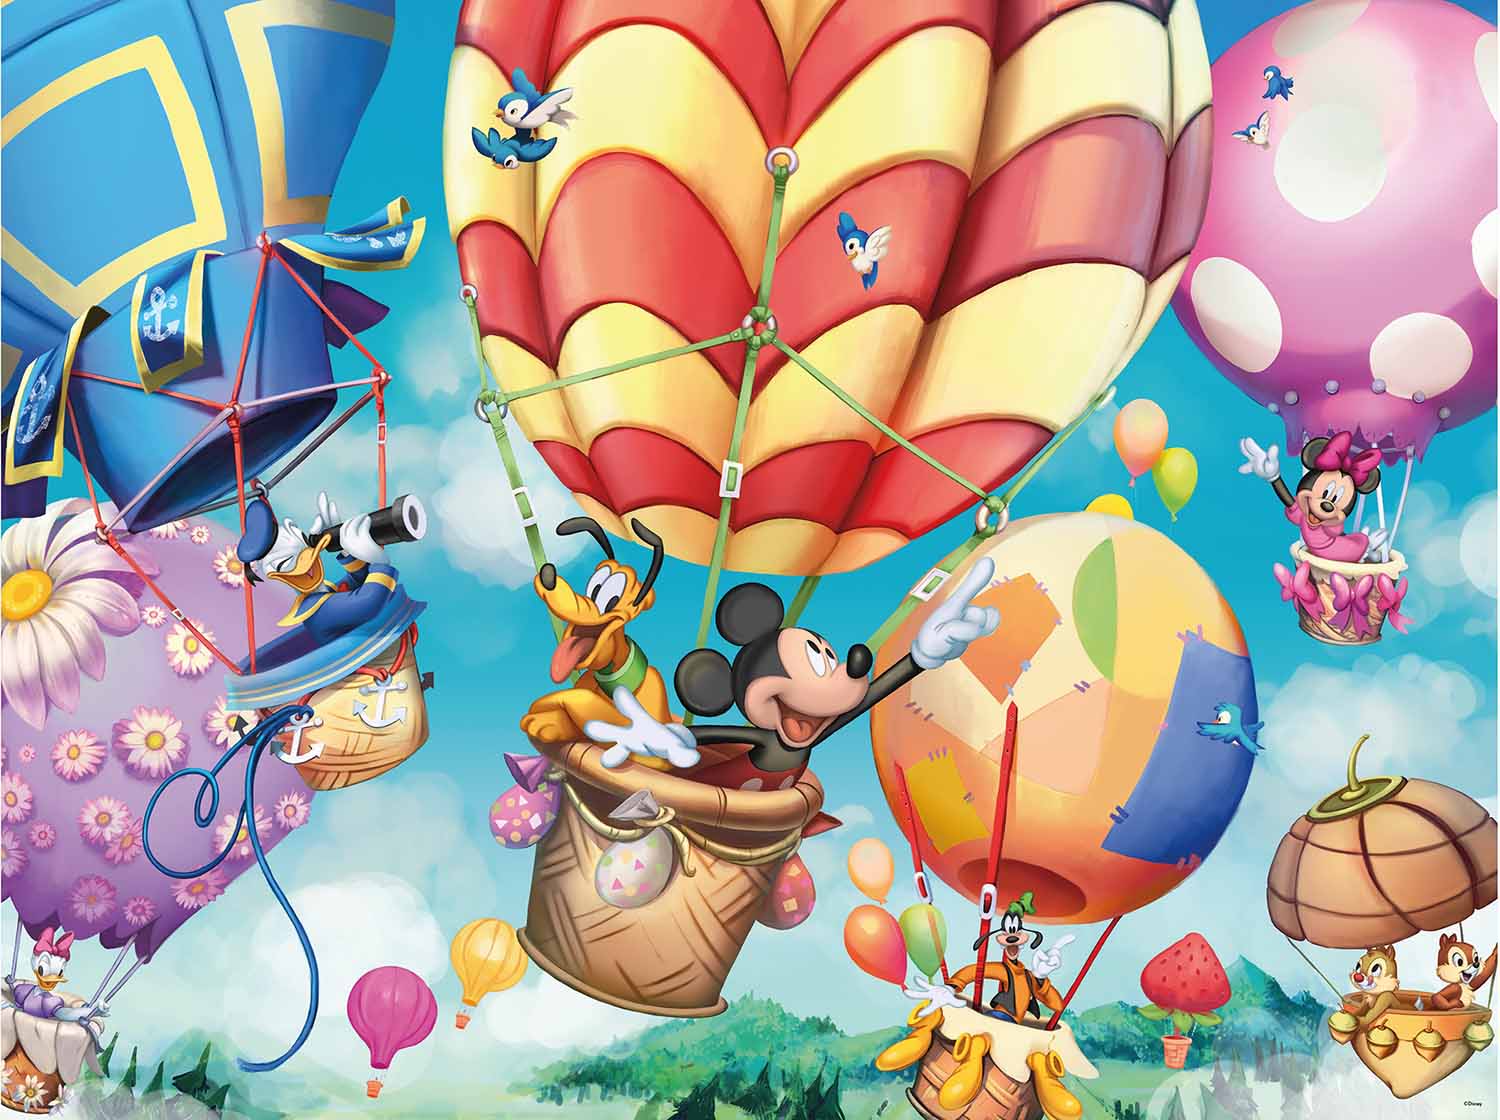 Disney - Mickey’s Air Balloon Disney Jigsaw Puzzle